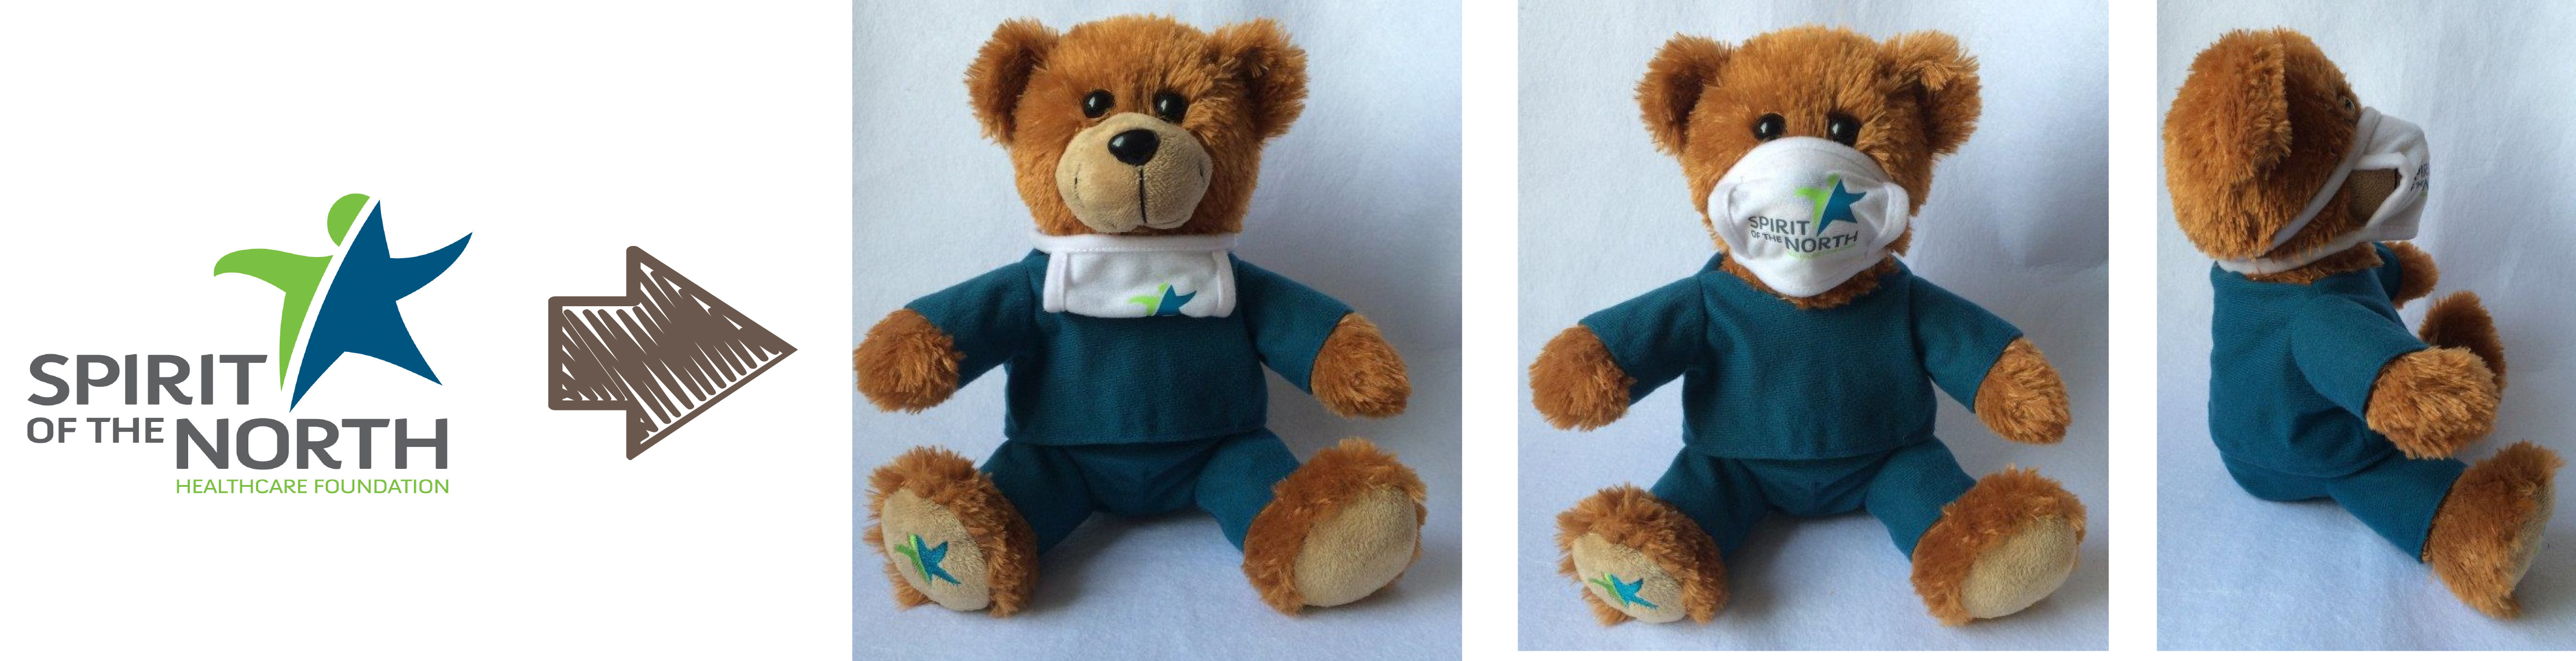 Spirit of the North Healthcare Foundation custom teddy bear